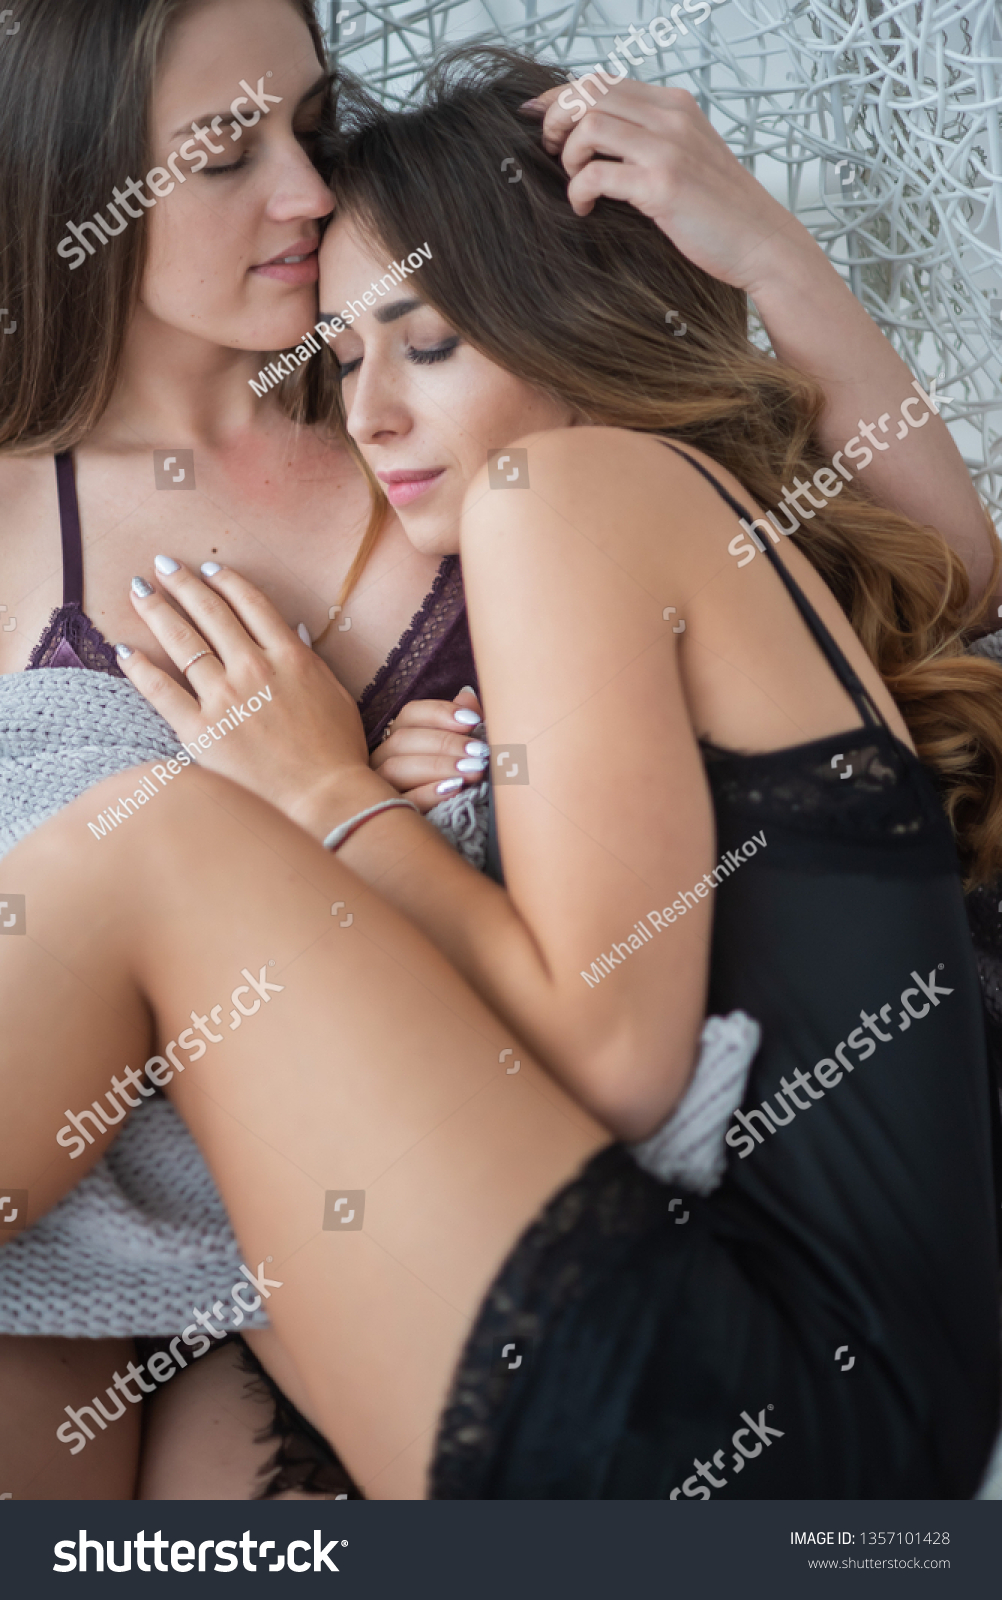 lesbian girls licking each other sex pics